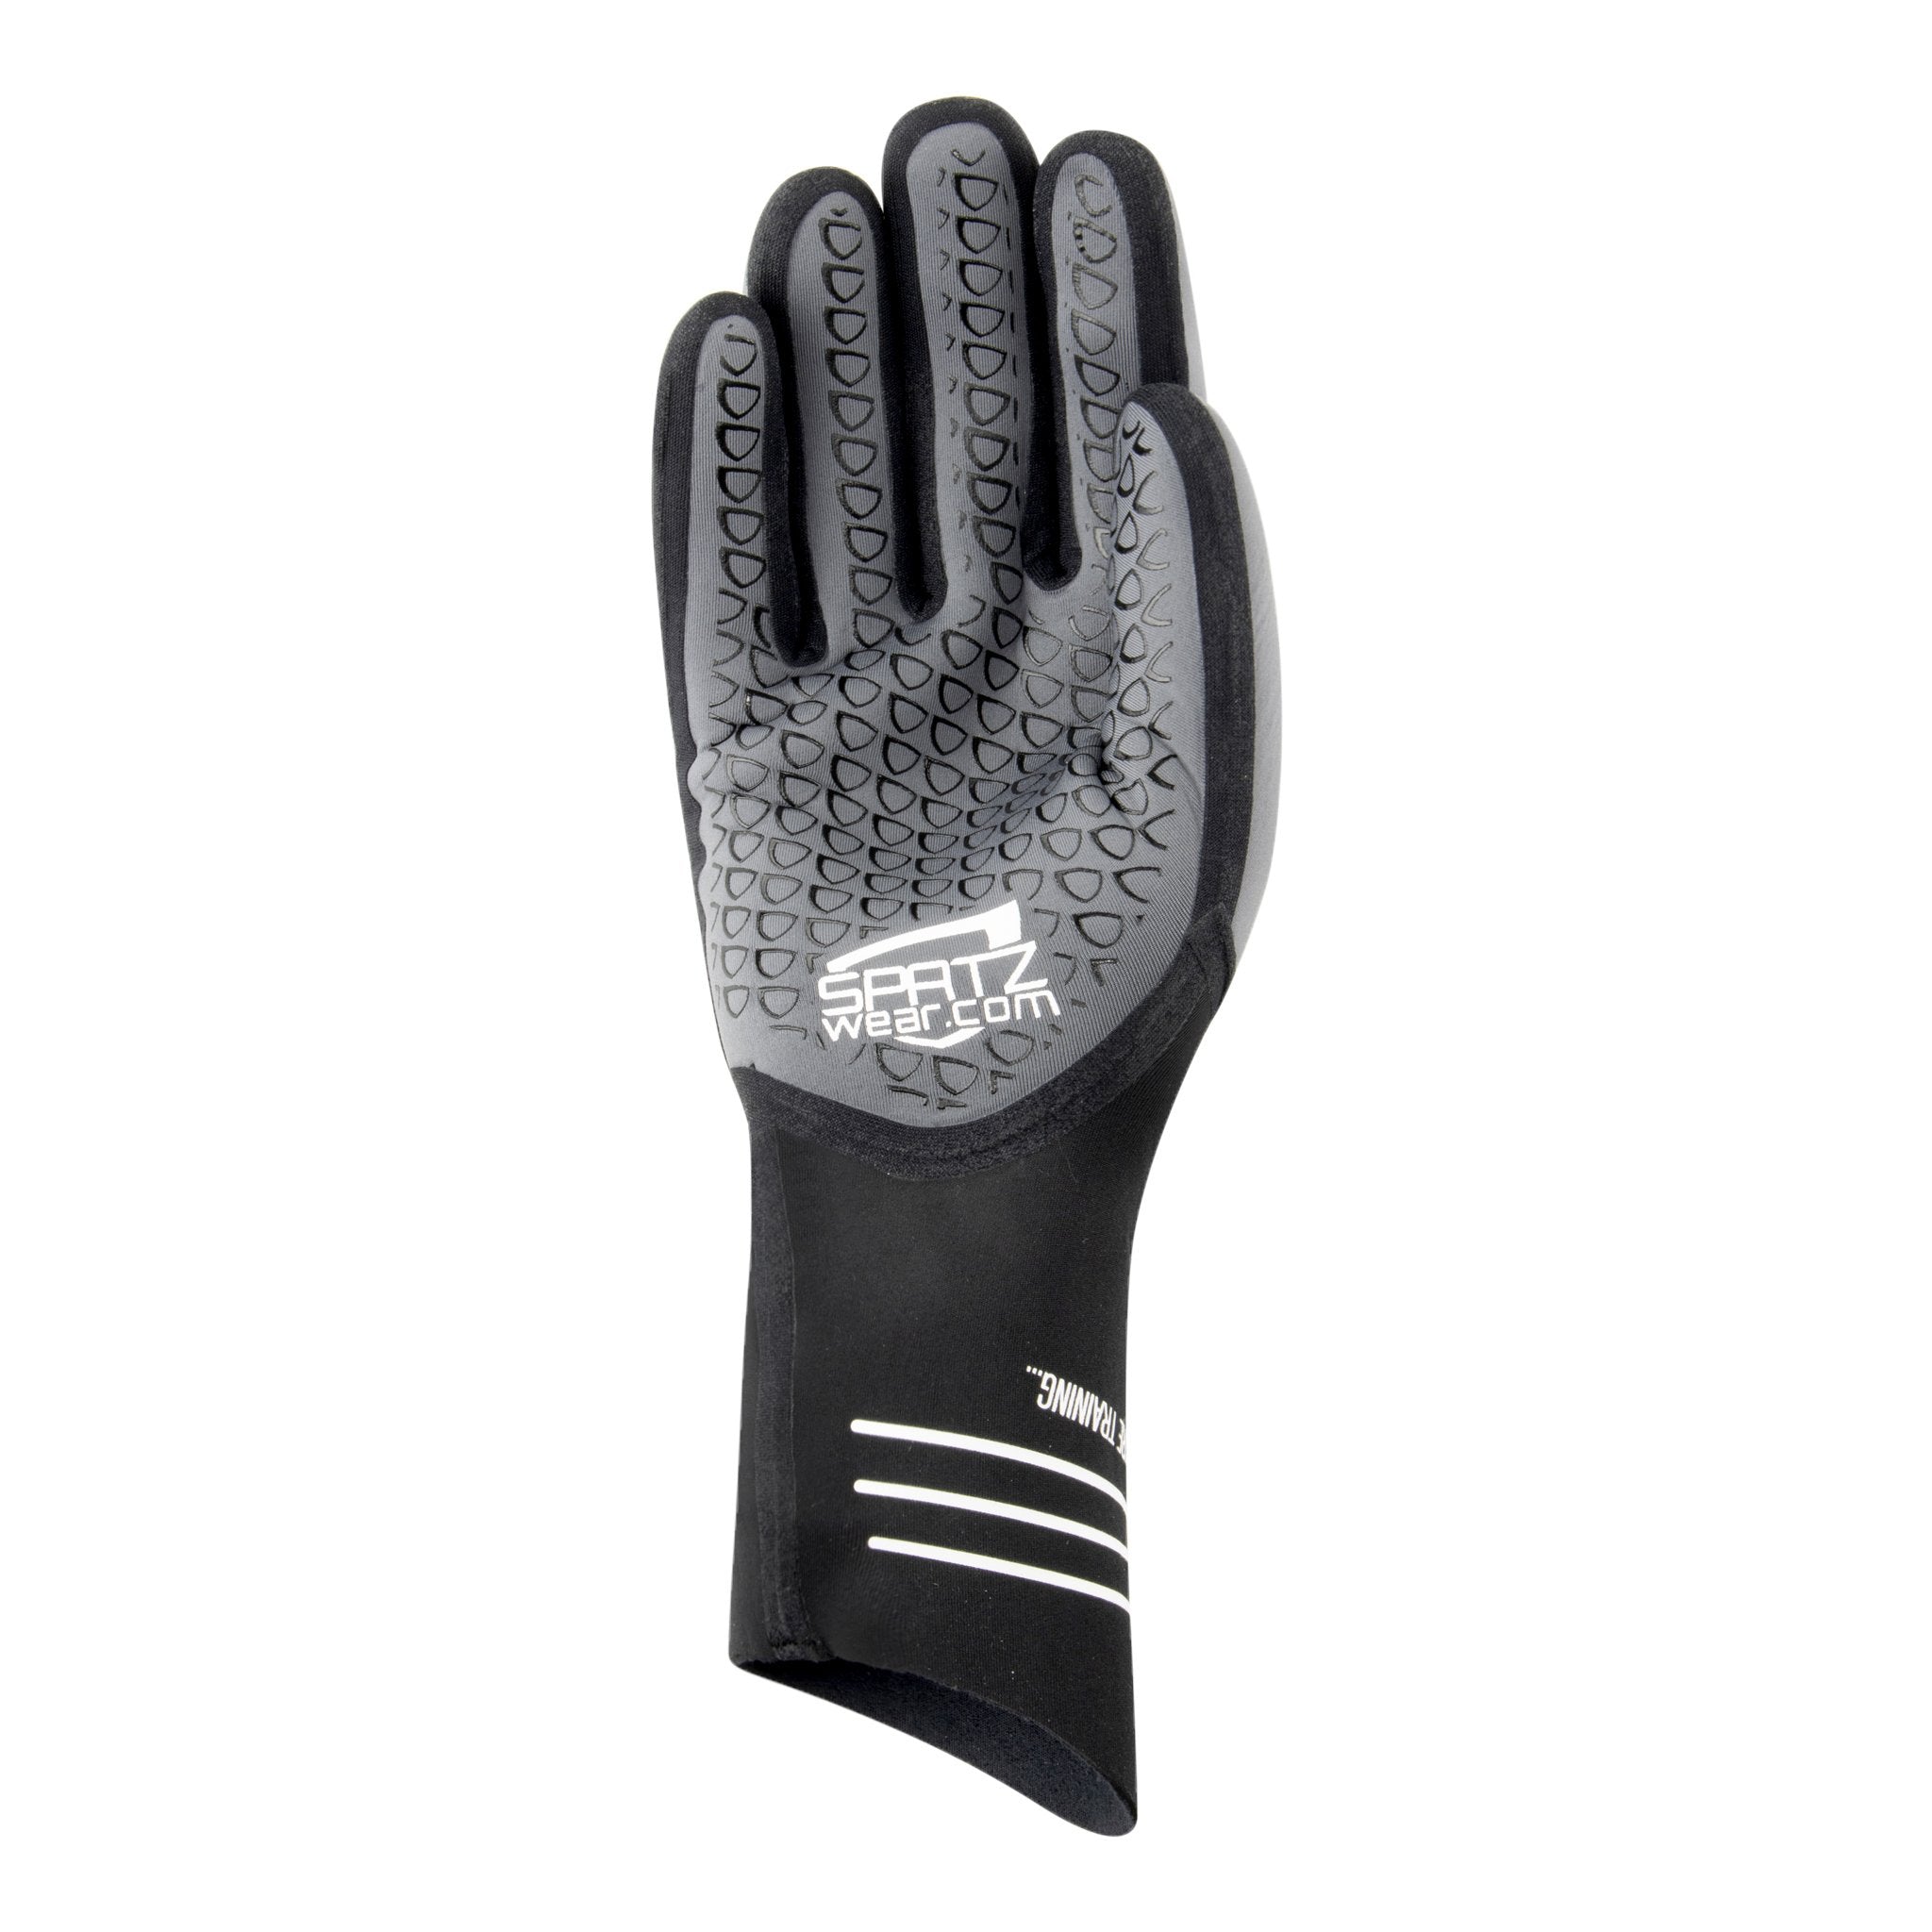 SPATZ "NEOZ" Thermal Neoprene Rain Gloves